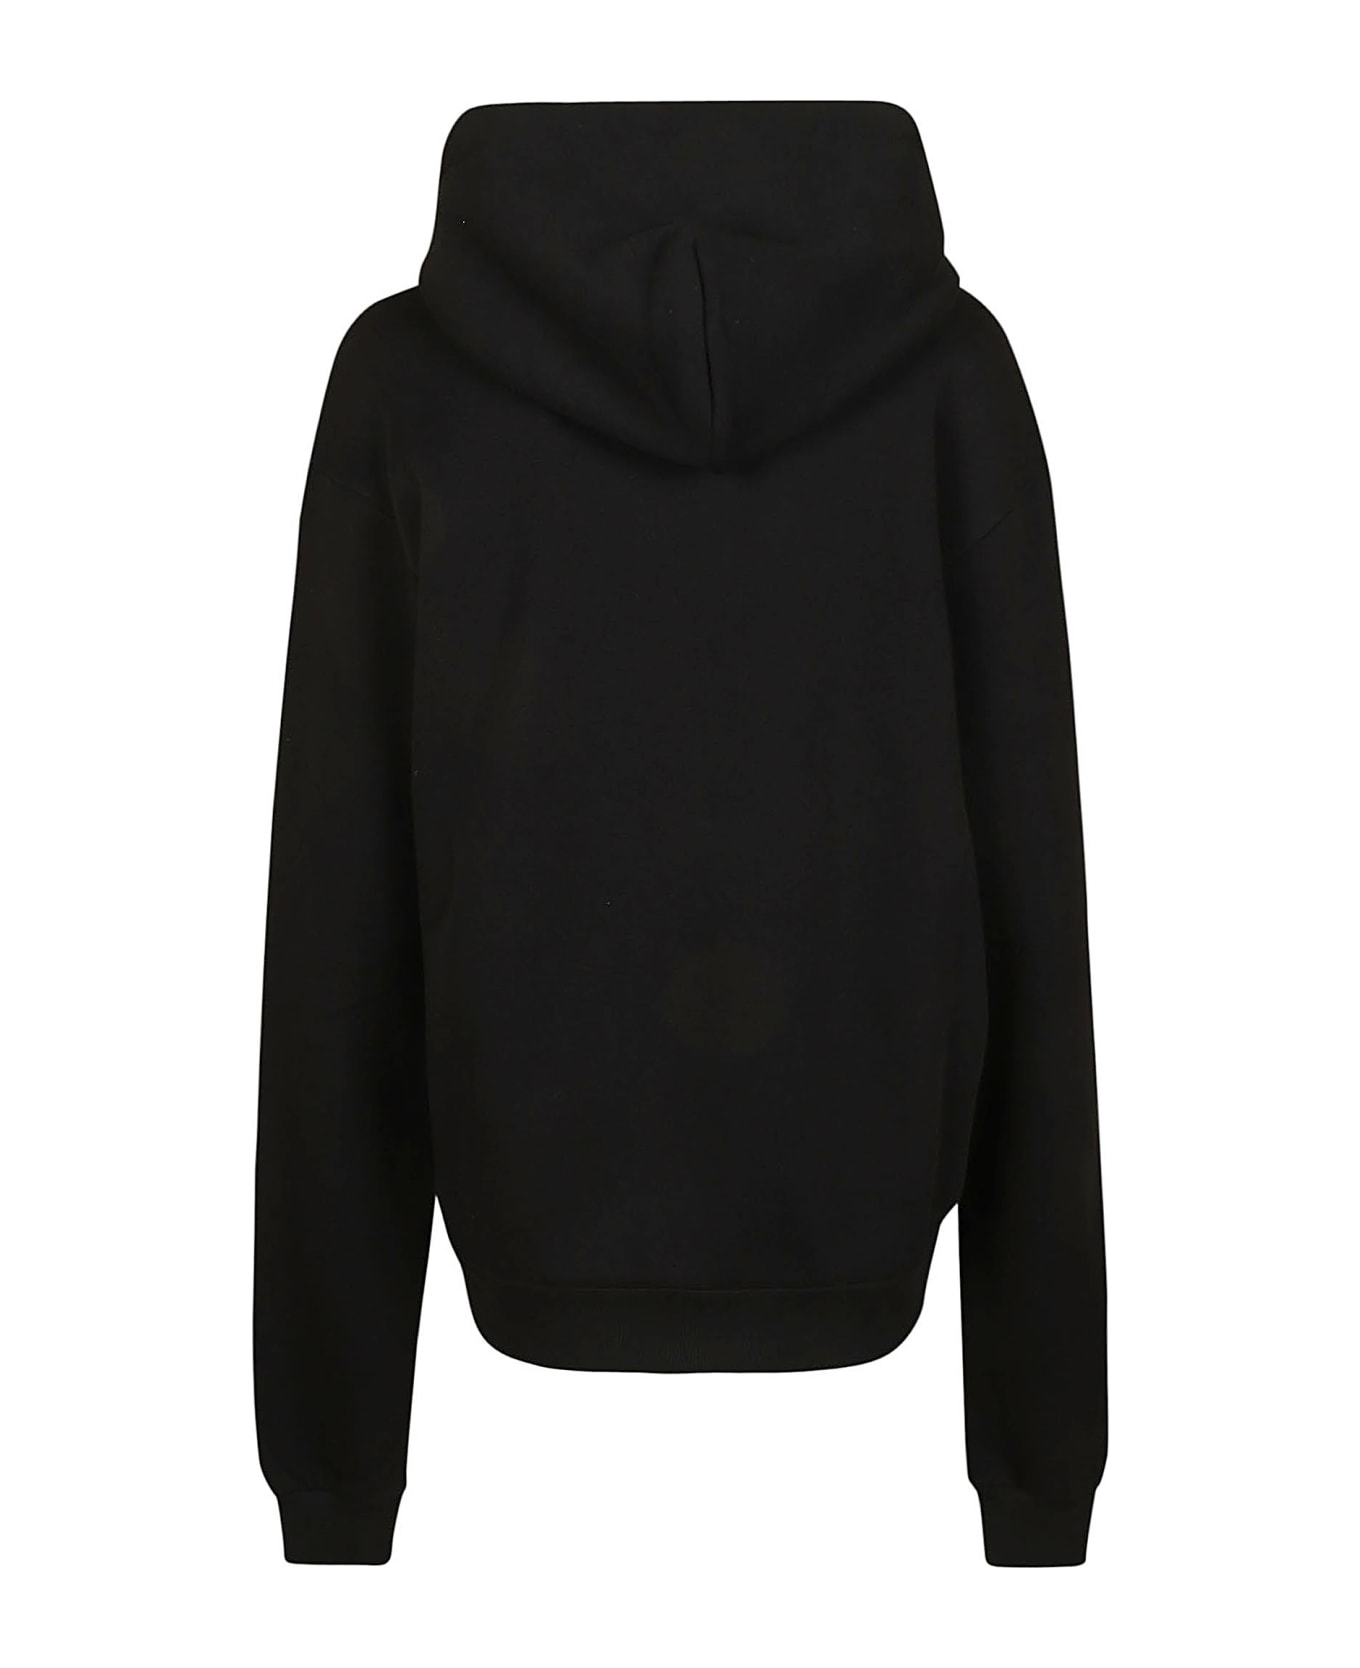 Dolce & Gabbana Made With Love Print Oversized Hooded Sweatshirt - Black